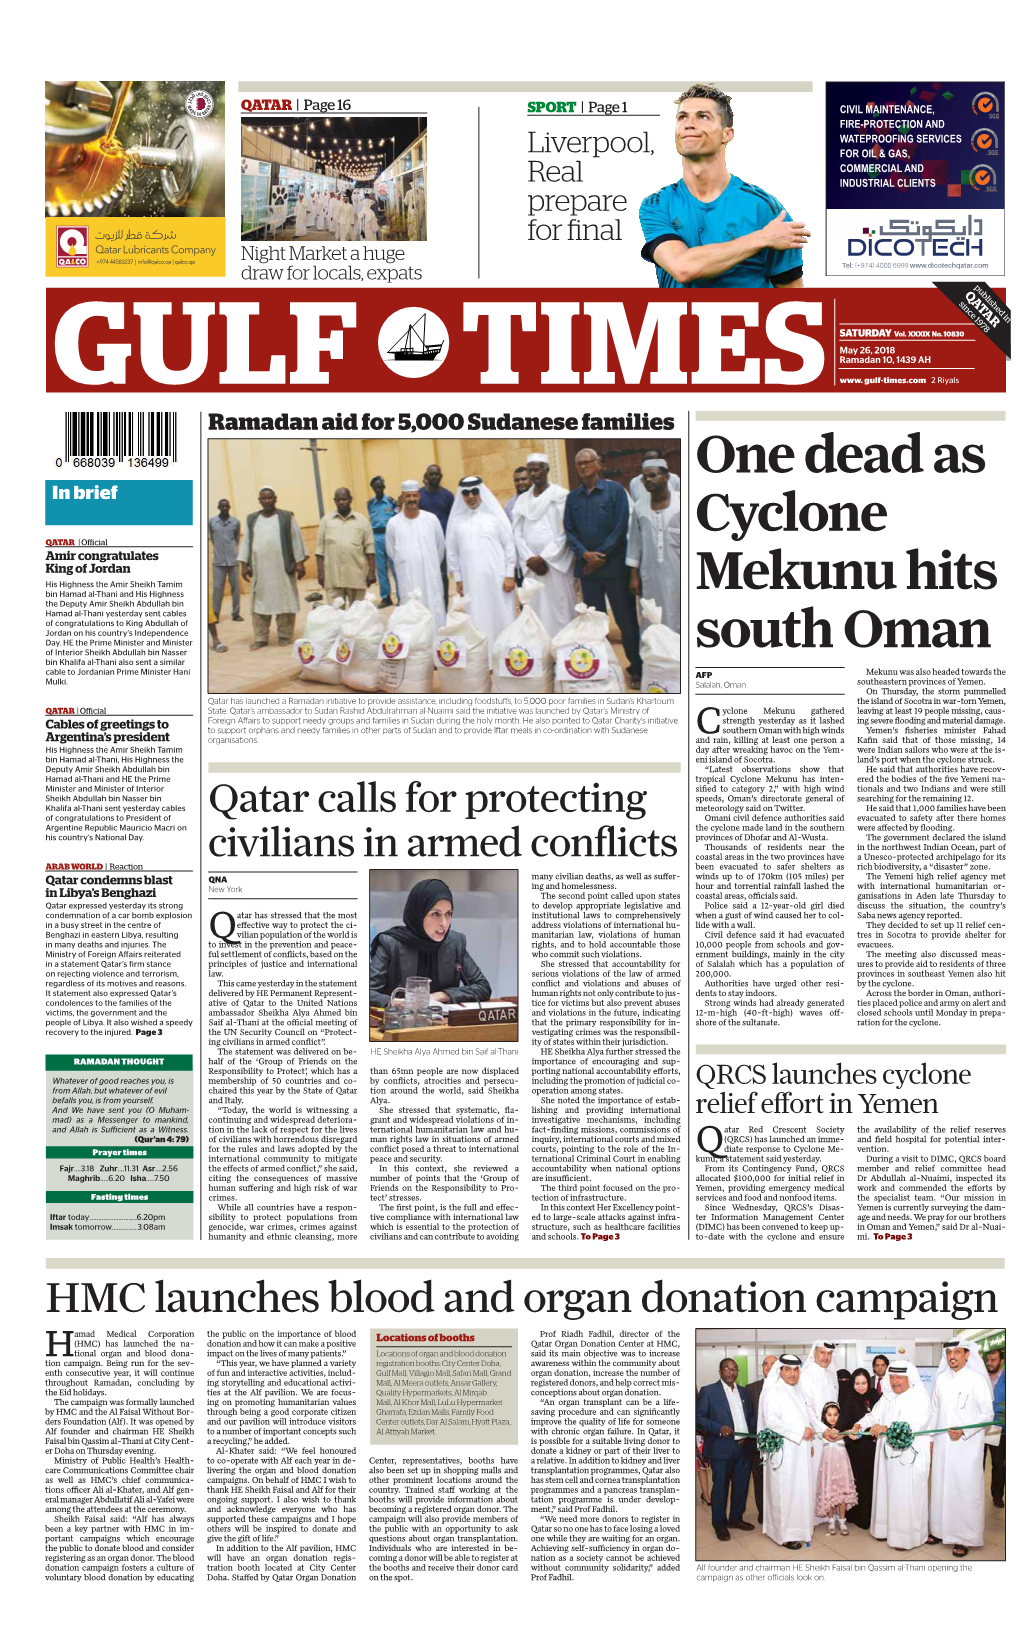 One Dead As Cyclone Mekunu Hits South Oman